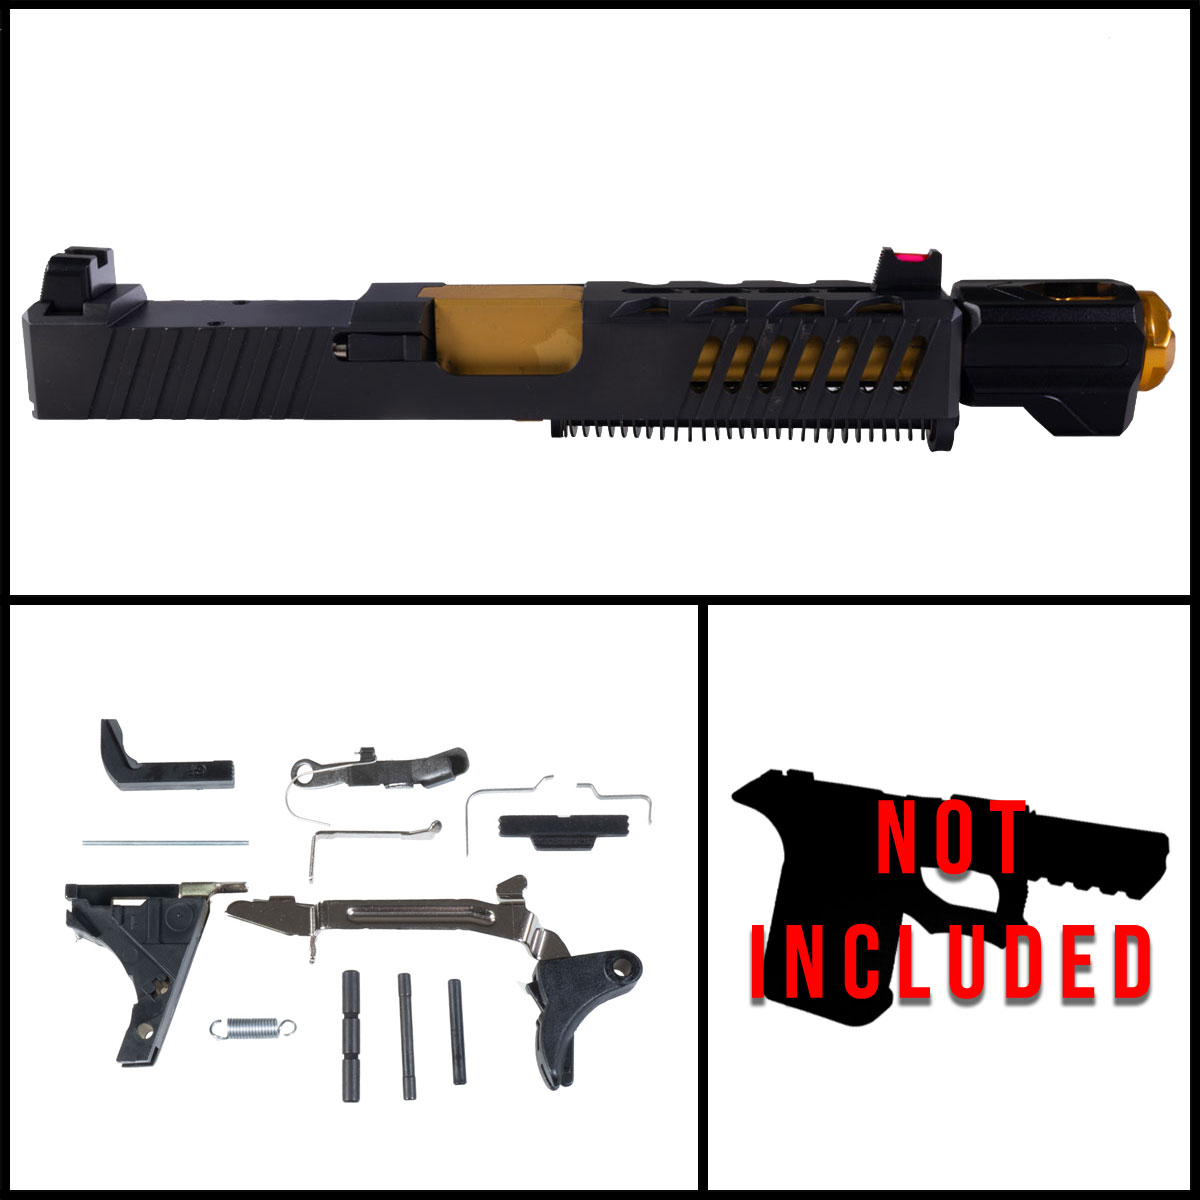 OTD 'Pow w/ Tyrant Designs Compensator' 9mm Full Pistol Build Kit (Everything Minus Frame) - Glock 19 Gen 1-3 Compatible